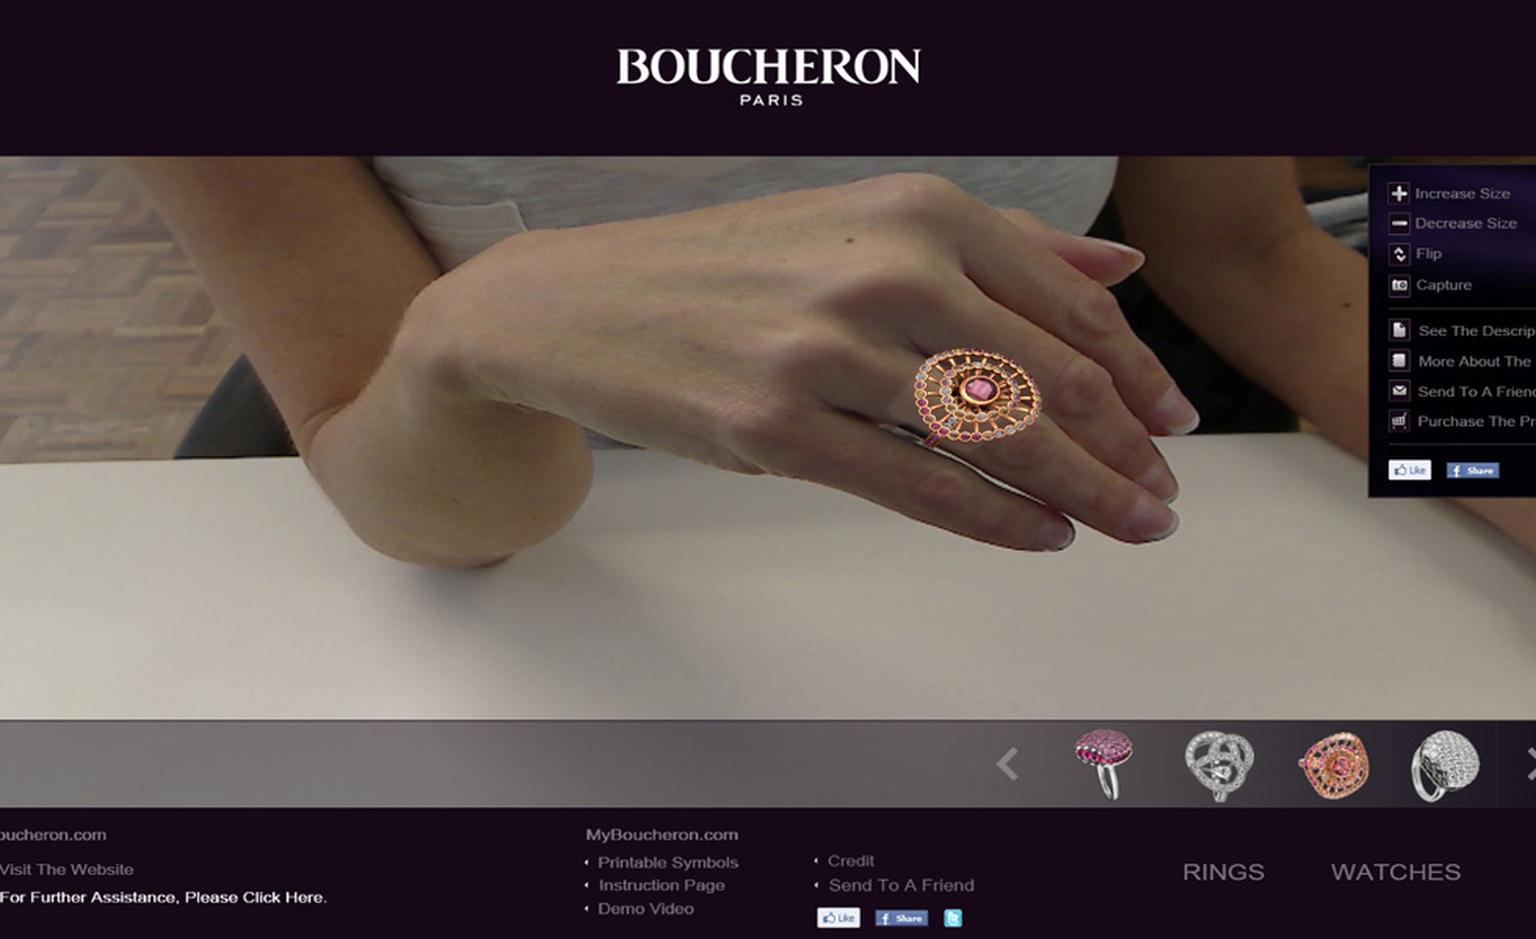 Boucheron's new virtual reality website